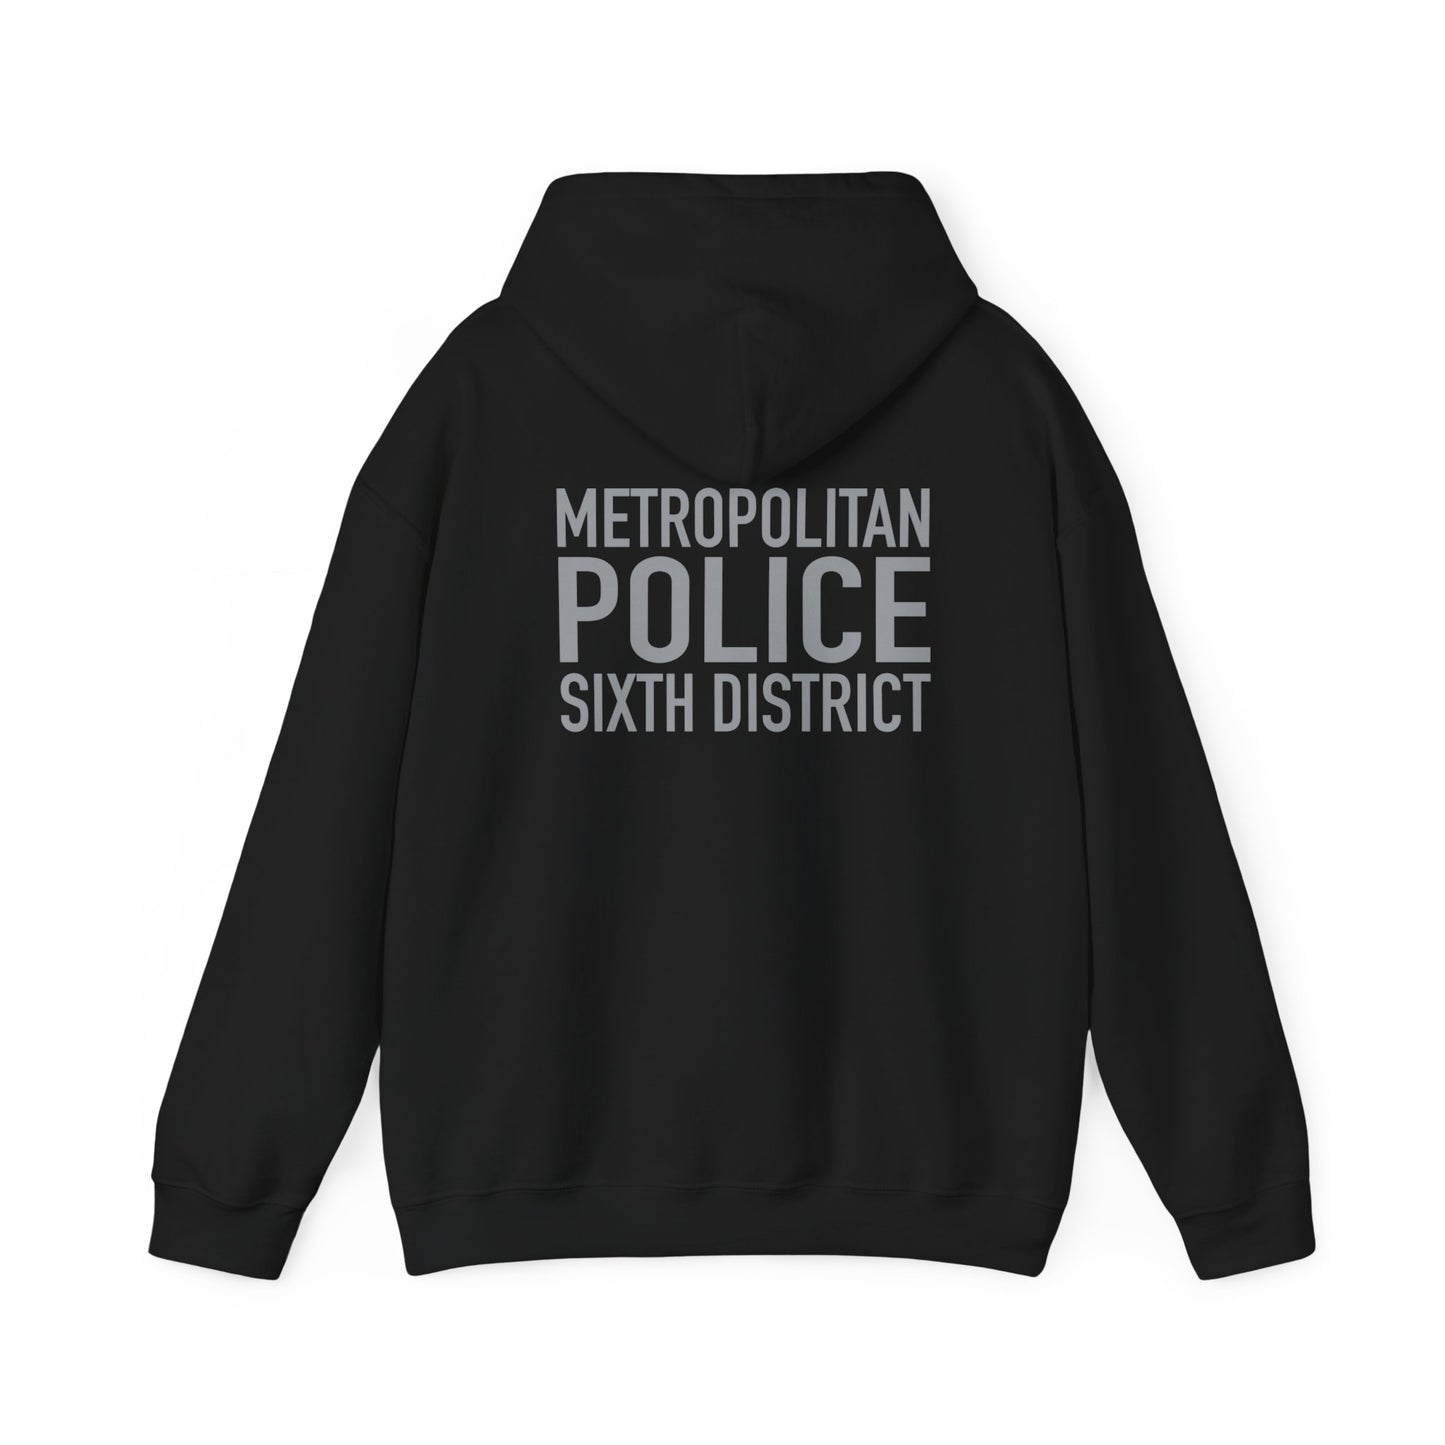 Classic MPD Sixth District Hooded Sweatshirt